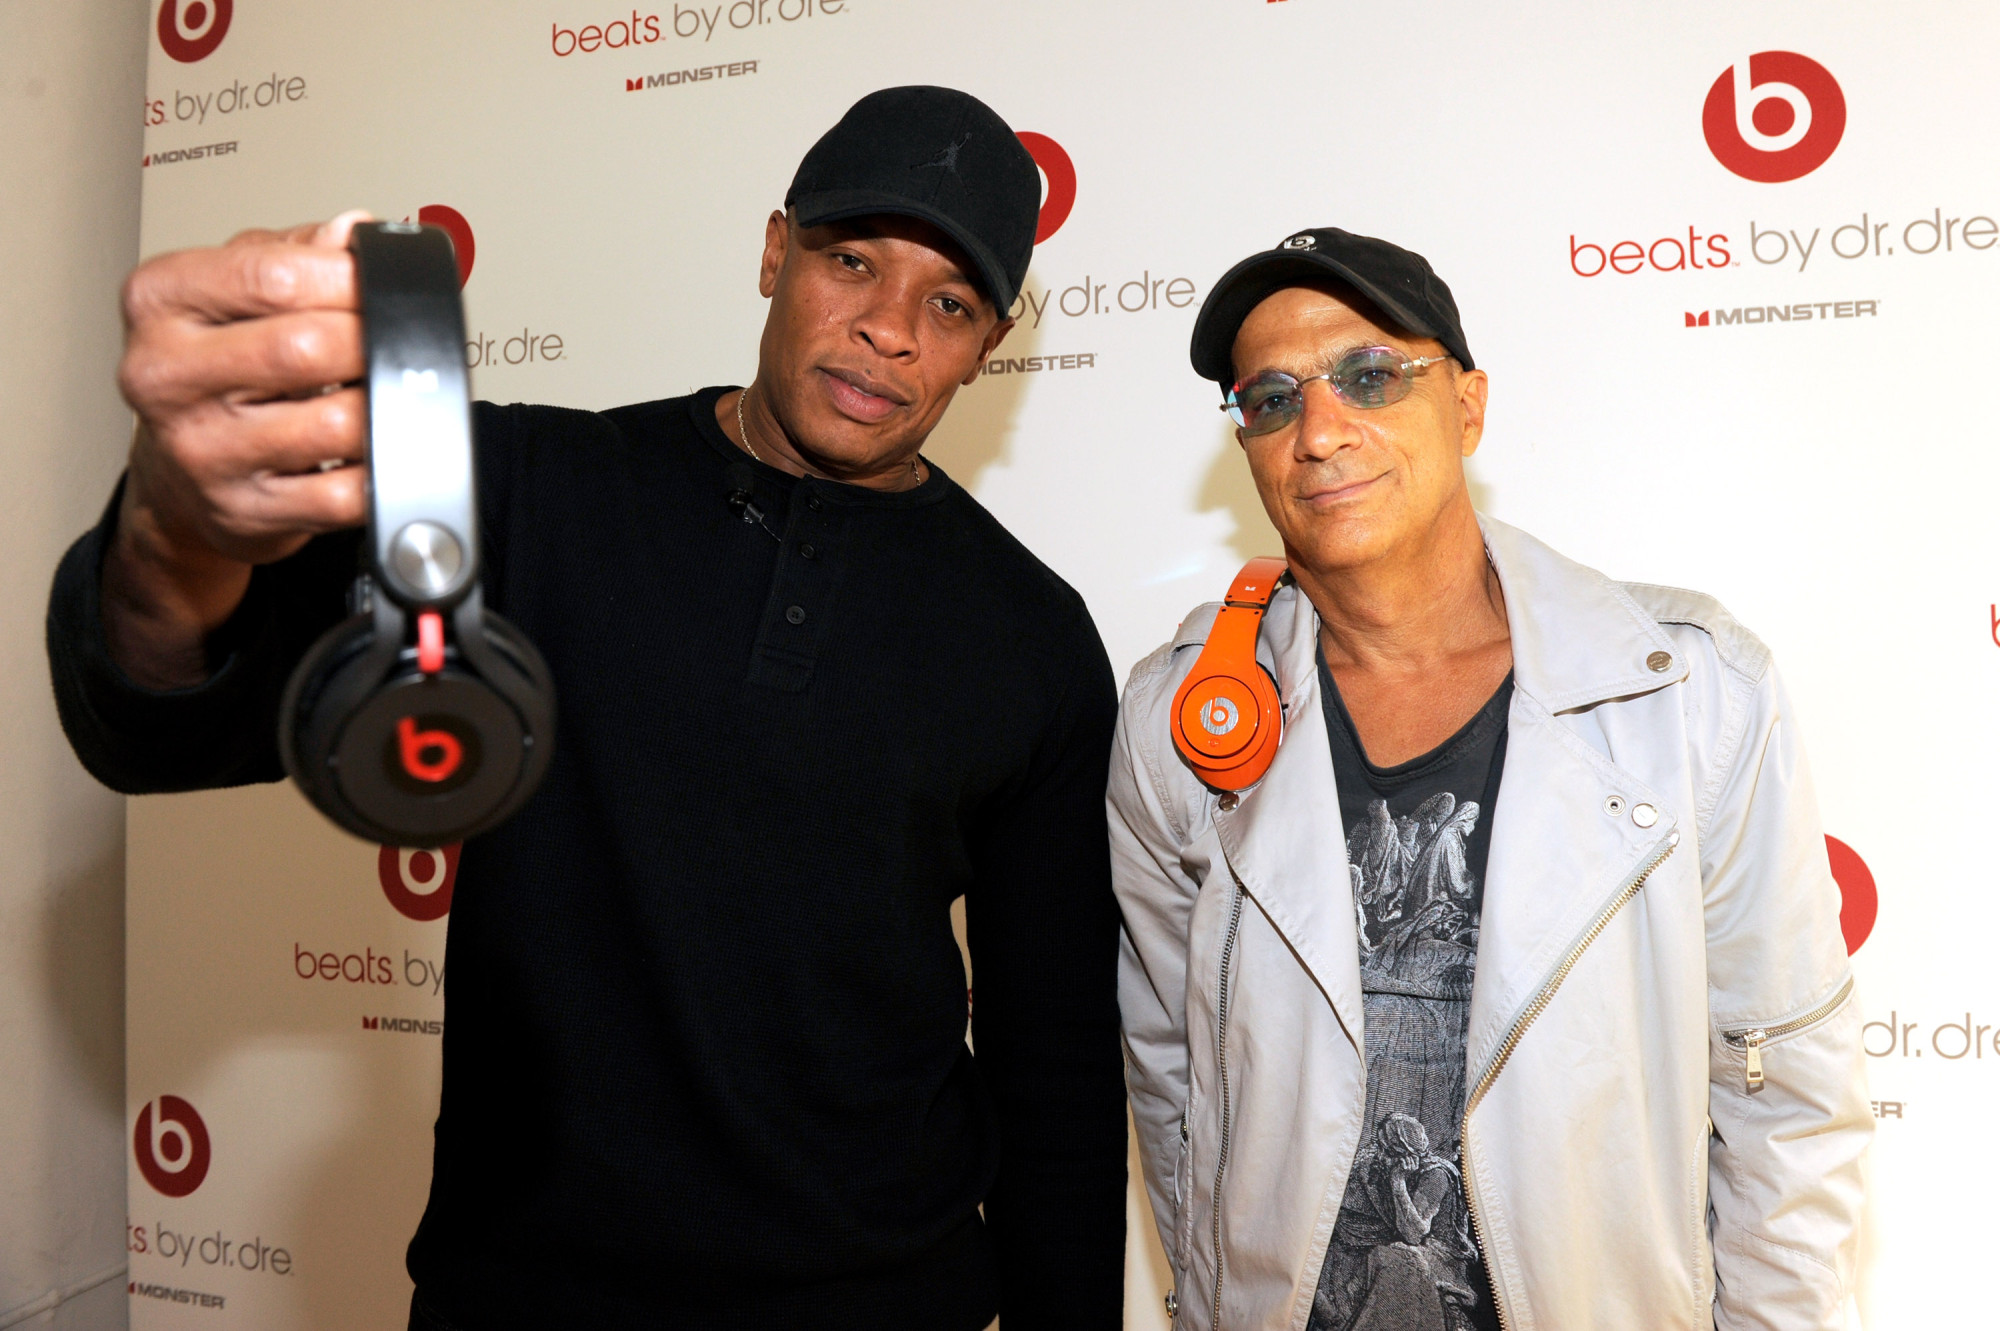 Jimmy Iovine i dr Dre zaprezentują bity Dr. Dre 2011 Holiday Product Lail-Up